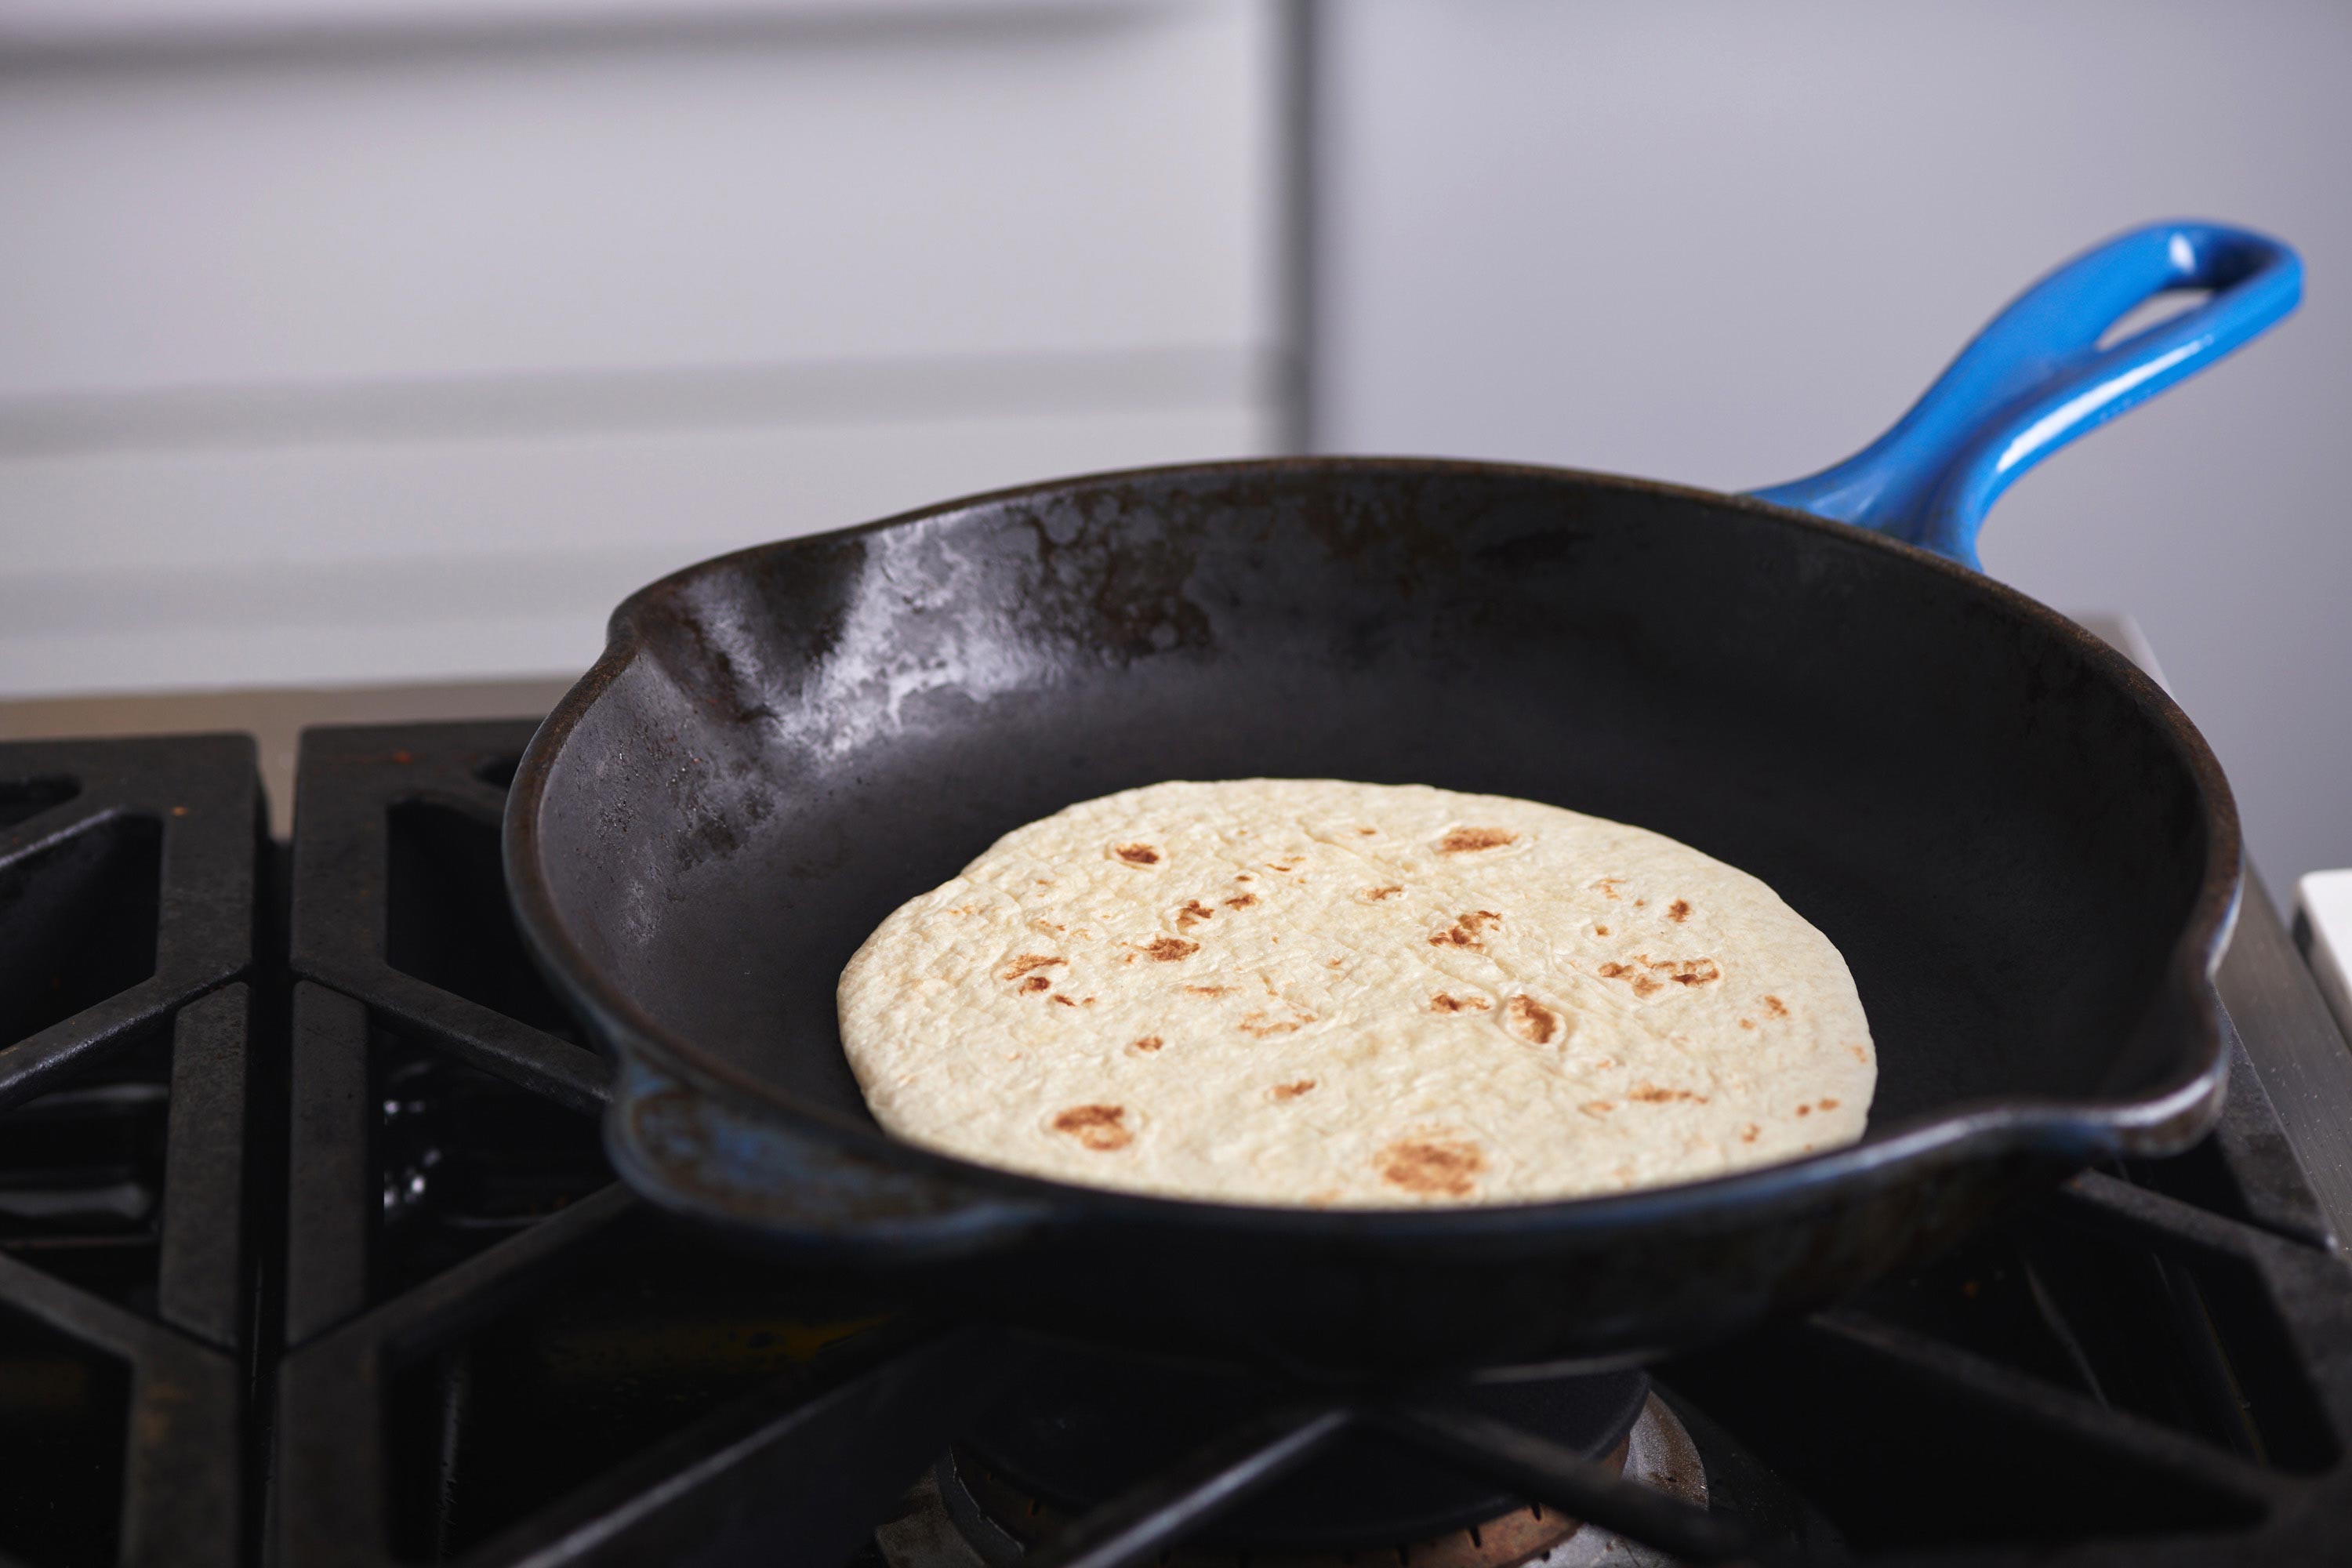 How do you heat up flour tortillas to keep them soft?